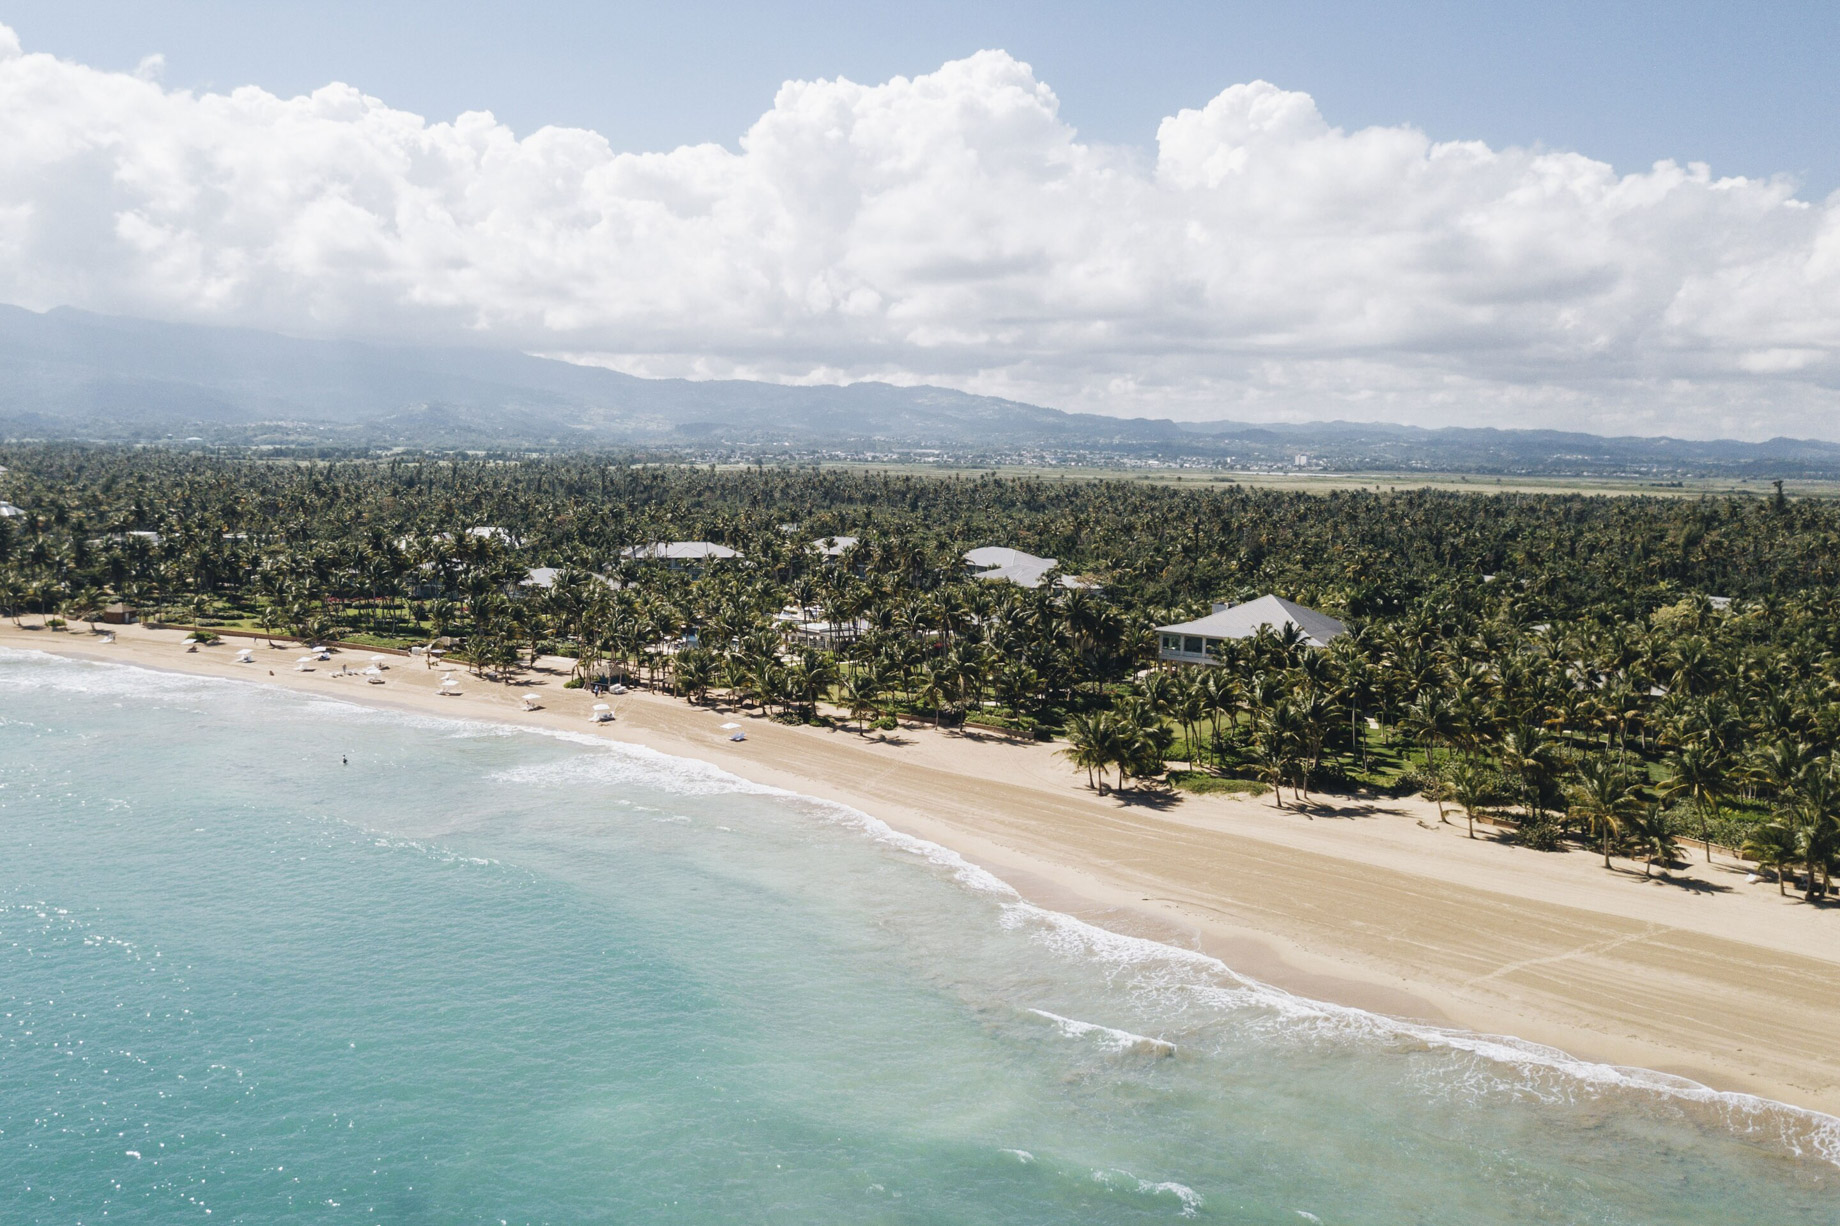 The St. Regis Bahia Beach Resort - Rio Grande, Puerto Rico - Beach Landscape View